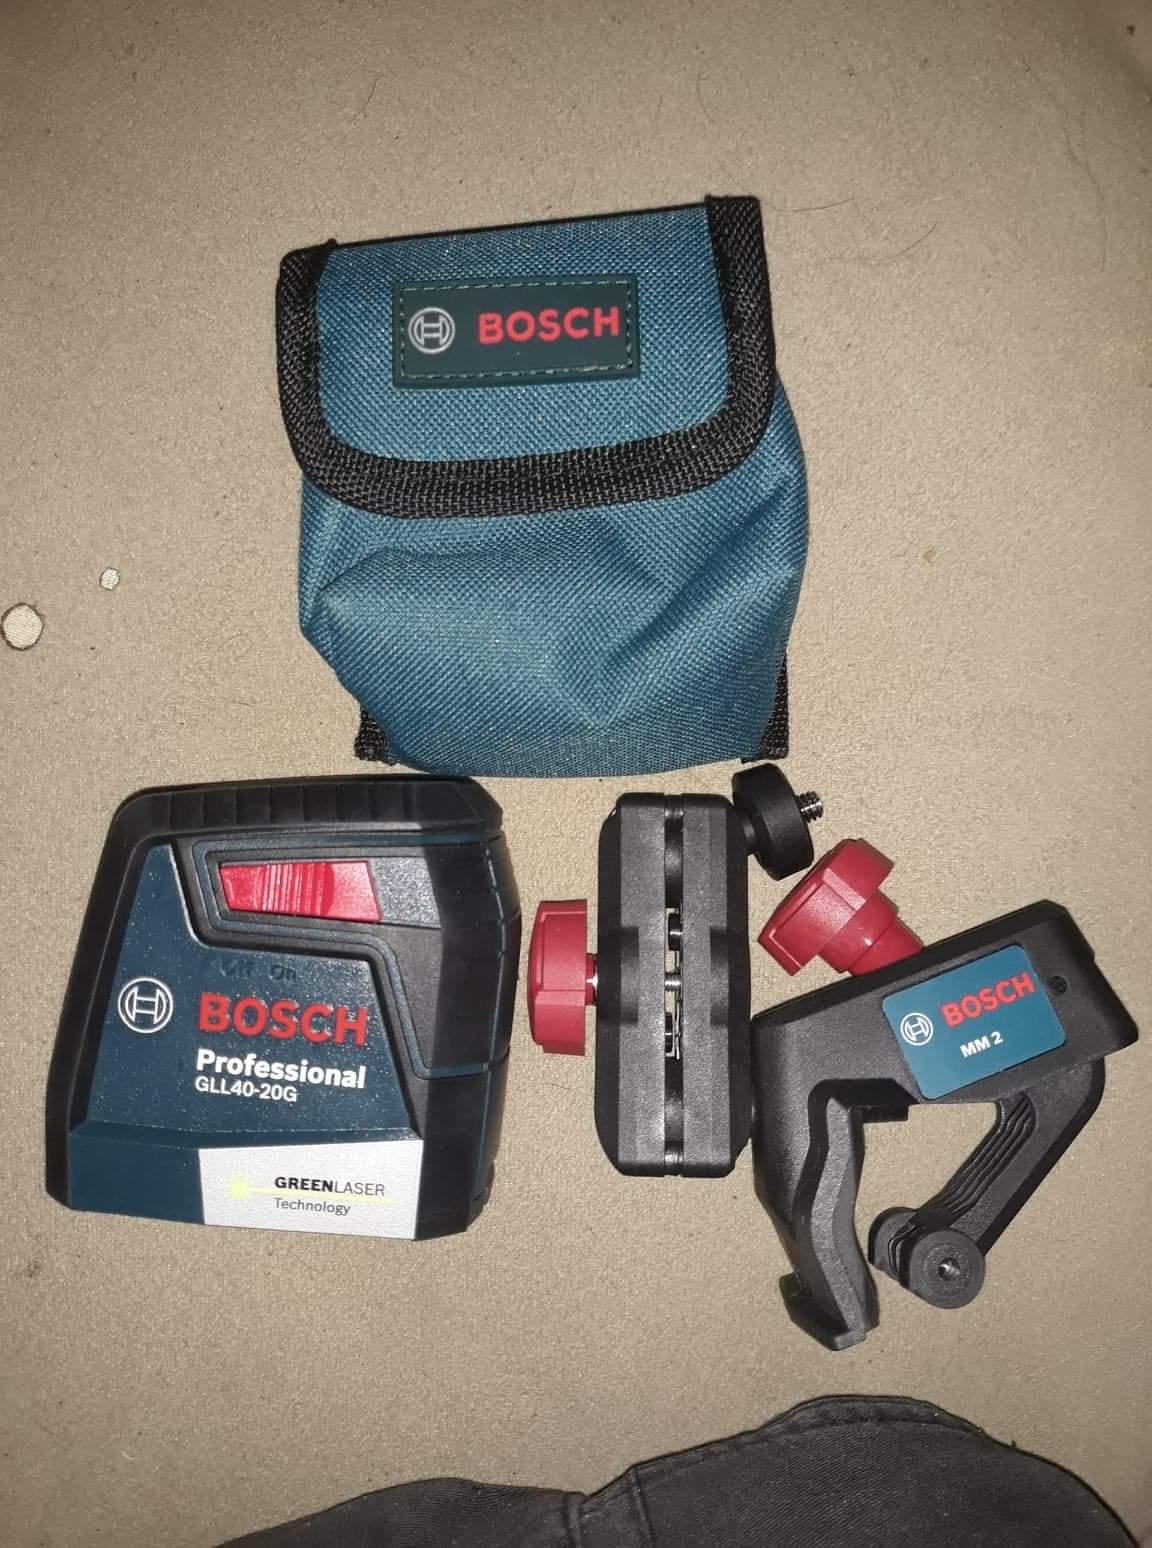 Bosch Professional GLL40-20G Green Laser